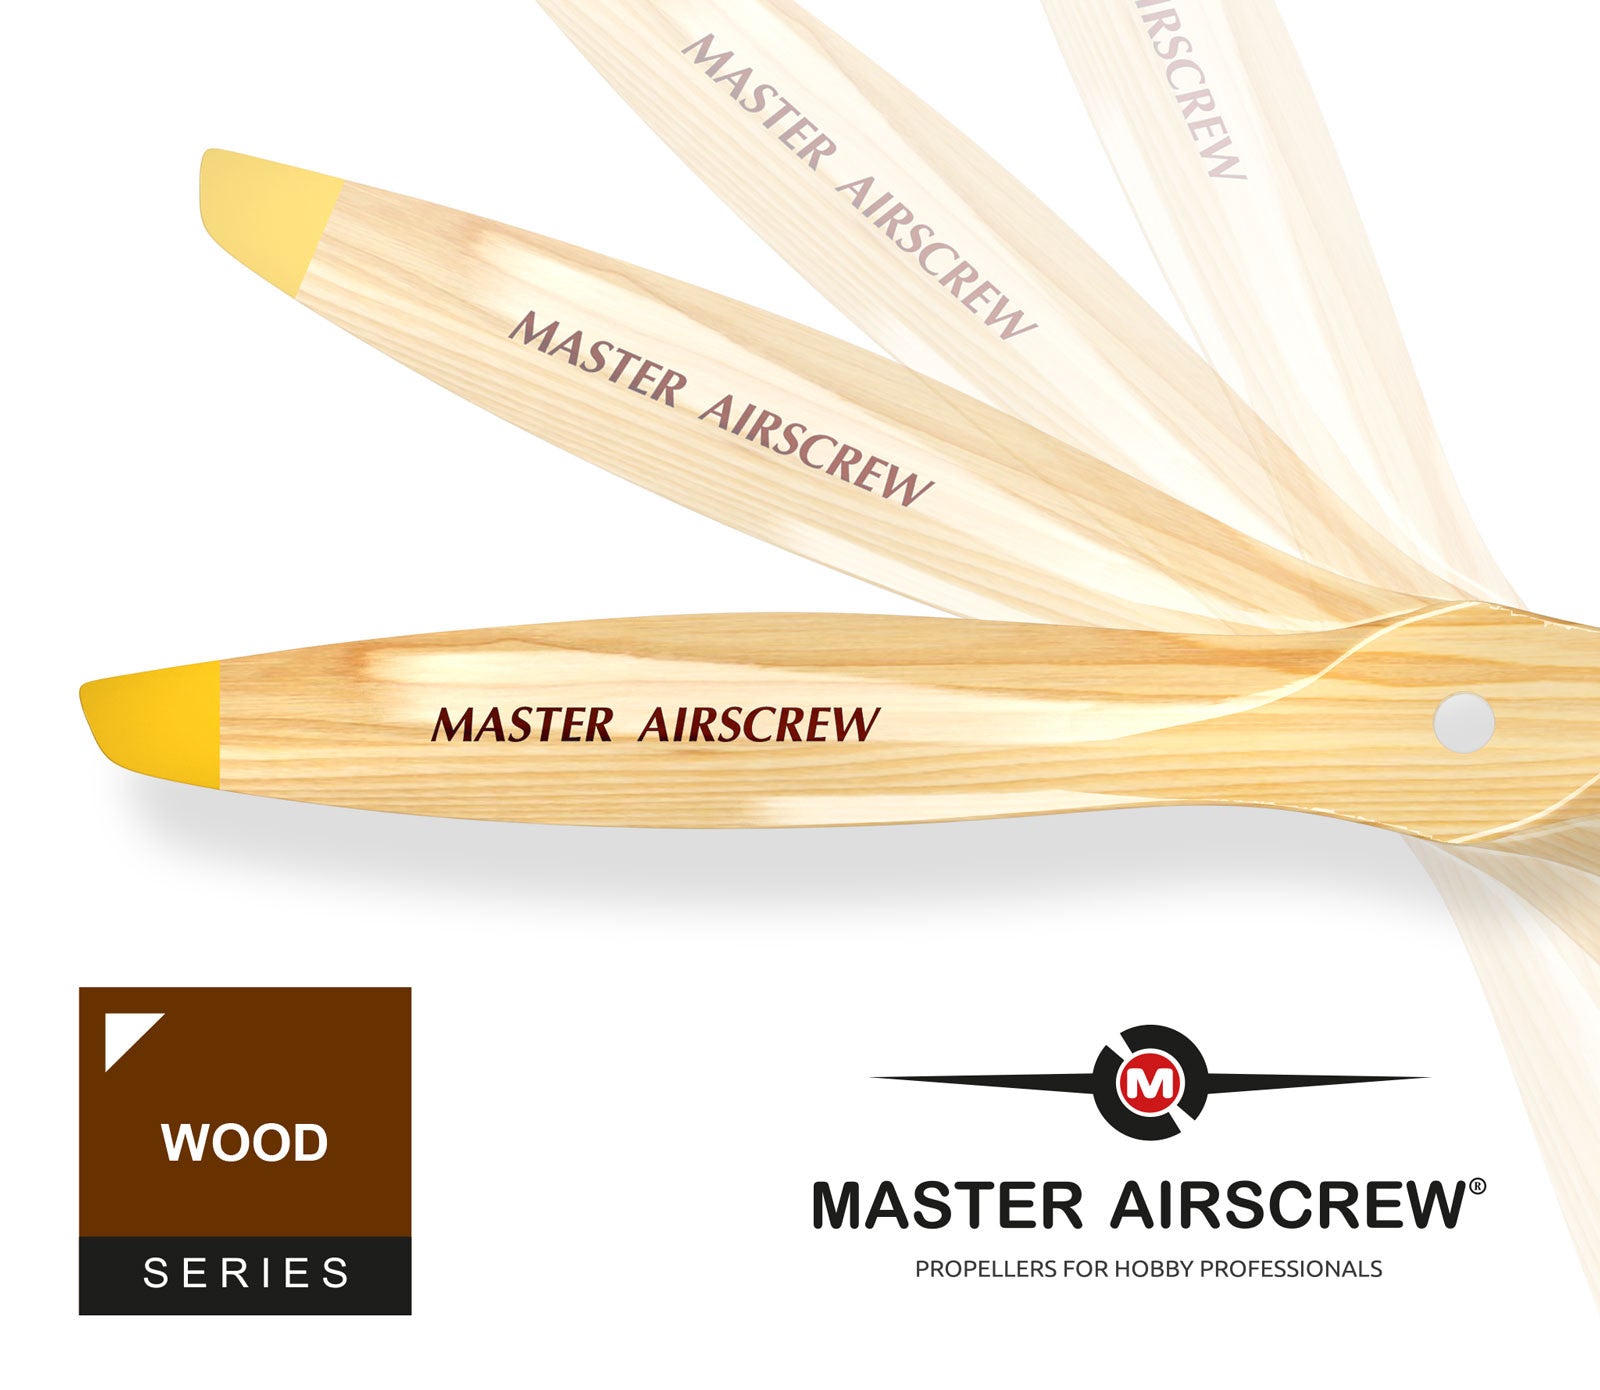 Wood-Maple - 18x6 Propeller - Master Airscrew